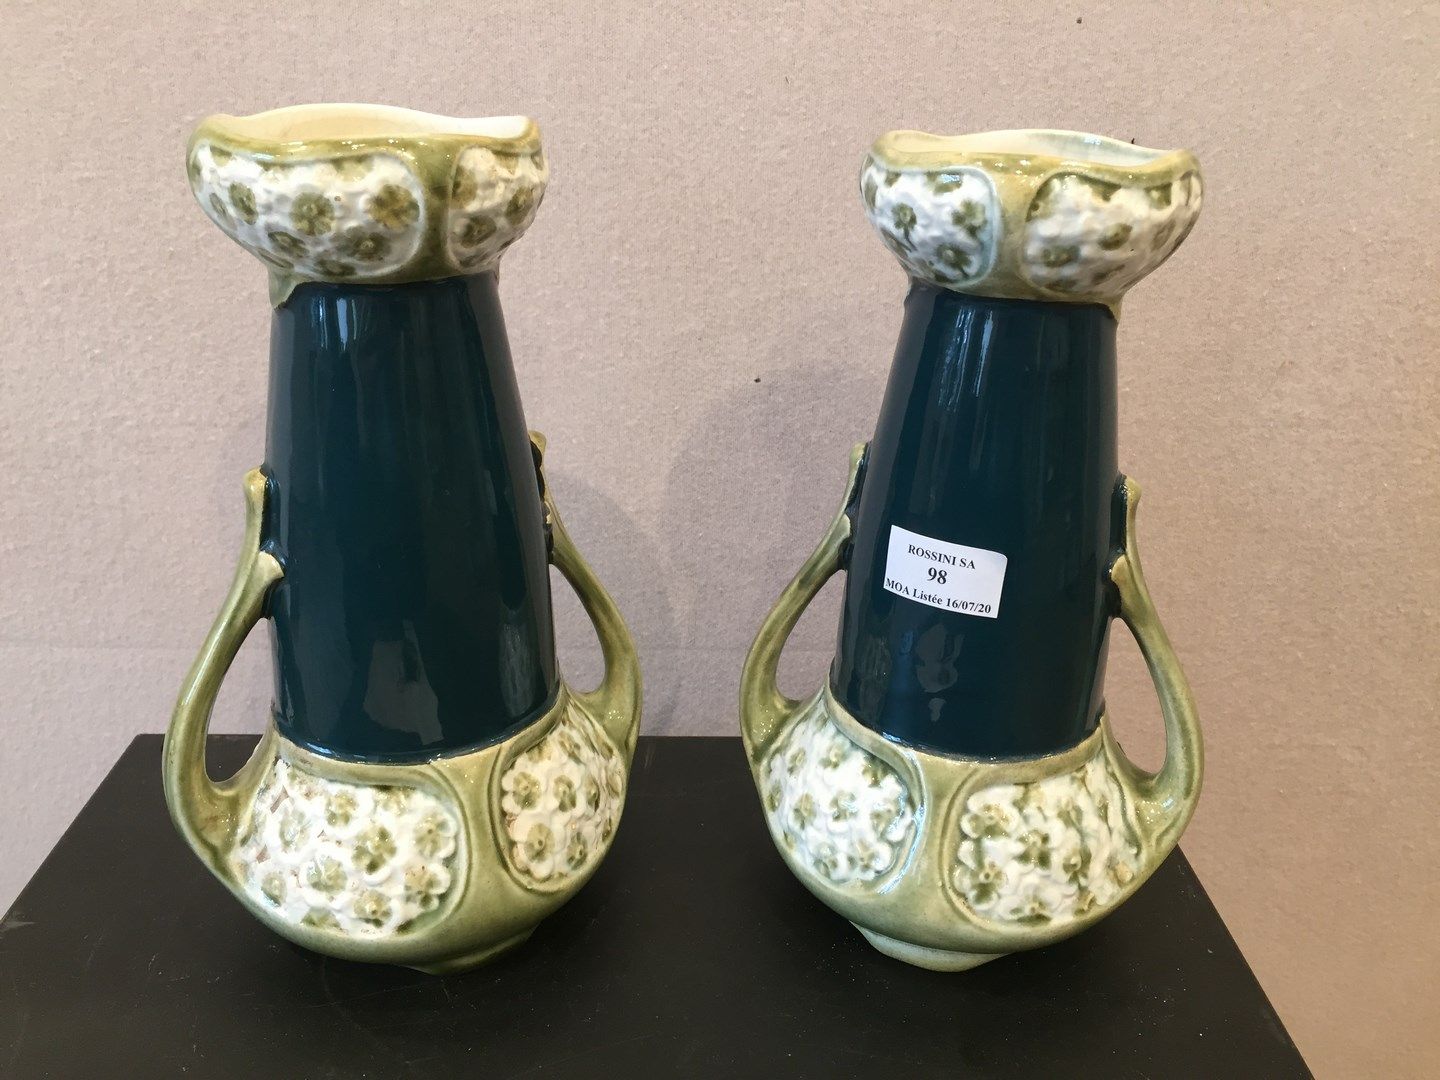 Null GUSTAVE DE BRUYON

Coppia di vasi in terracotta, 

H. 27,5 cm